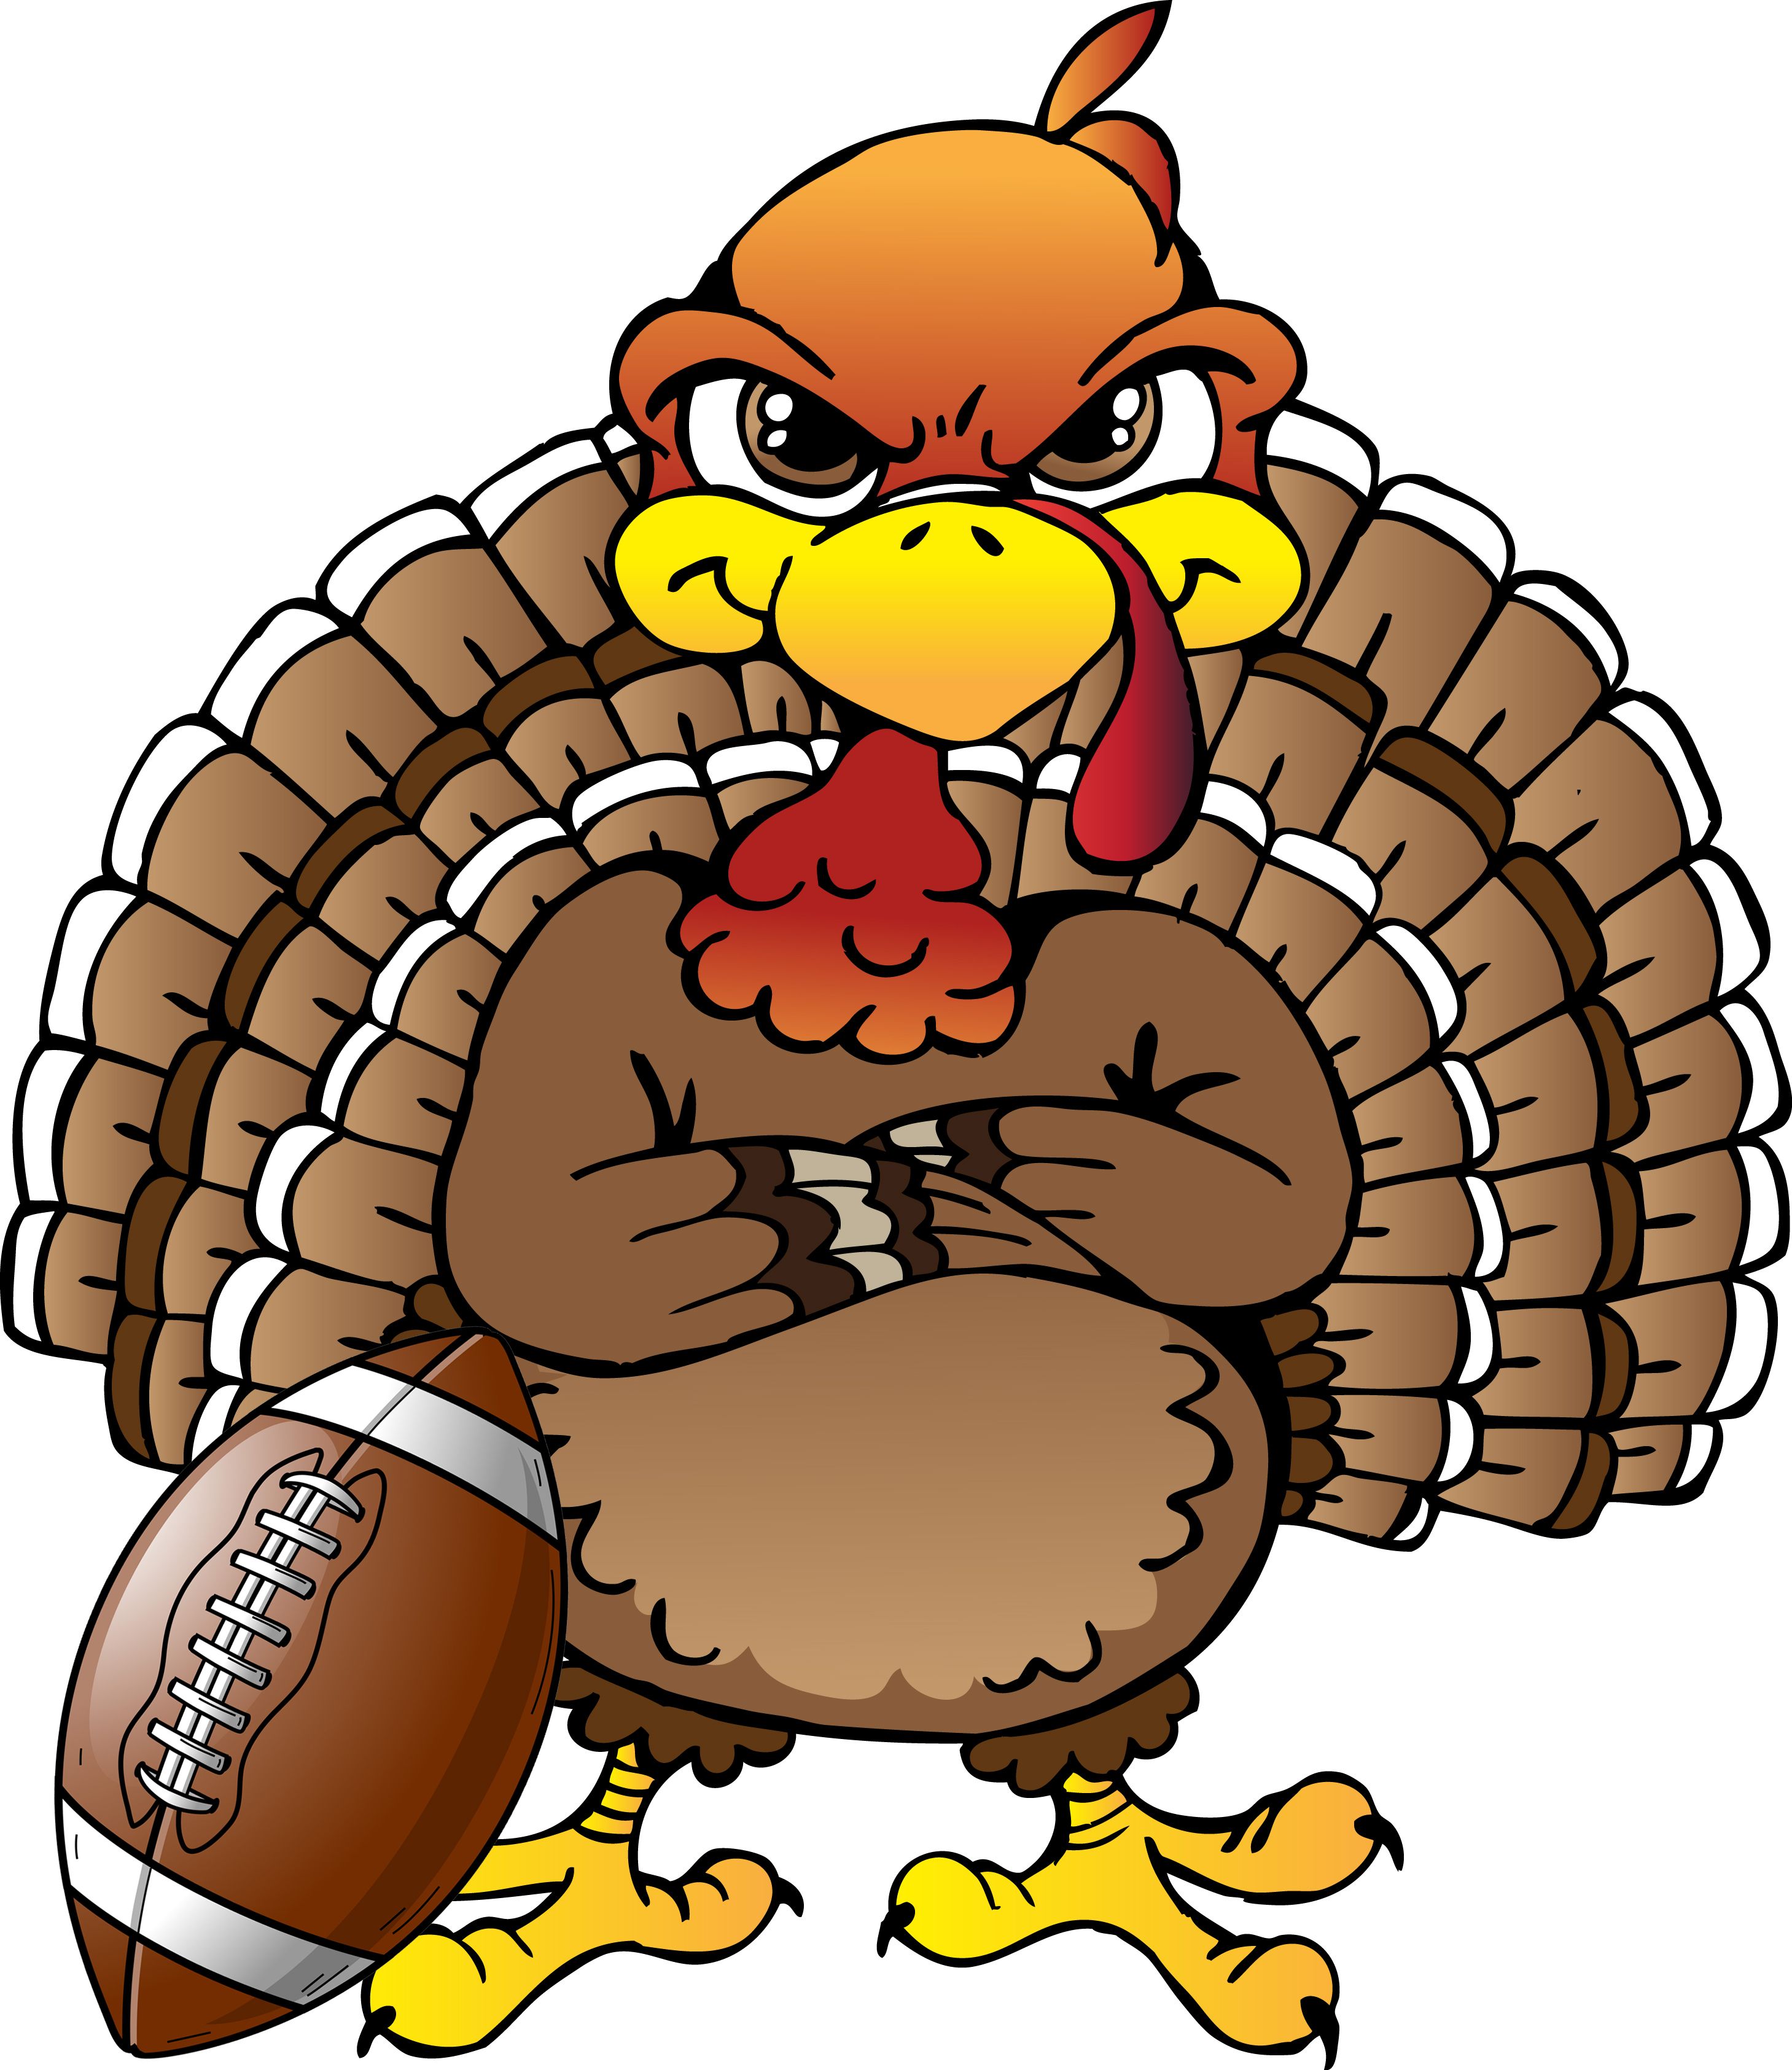 Thanksgiving Day NFL Picks. Thanksgiving picture, Thanksgiving wallpaper, Funny thanksgiving picture